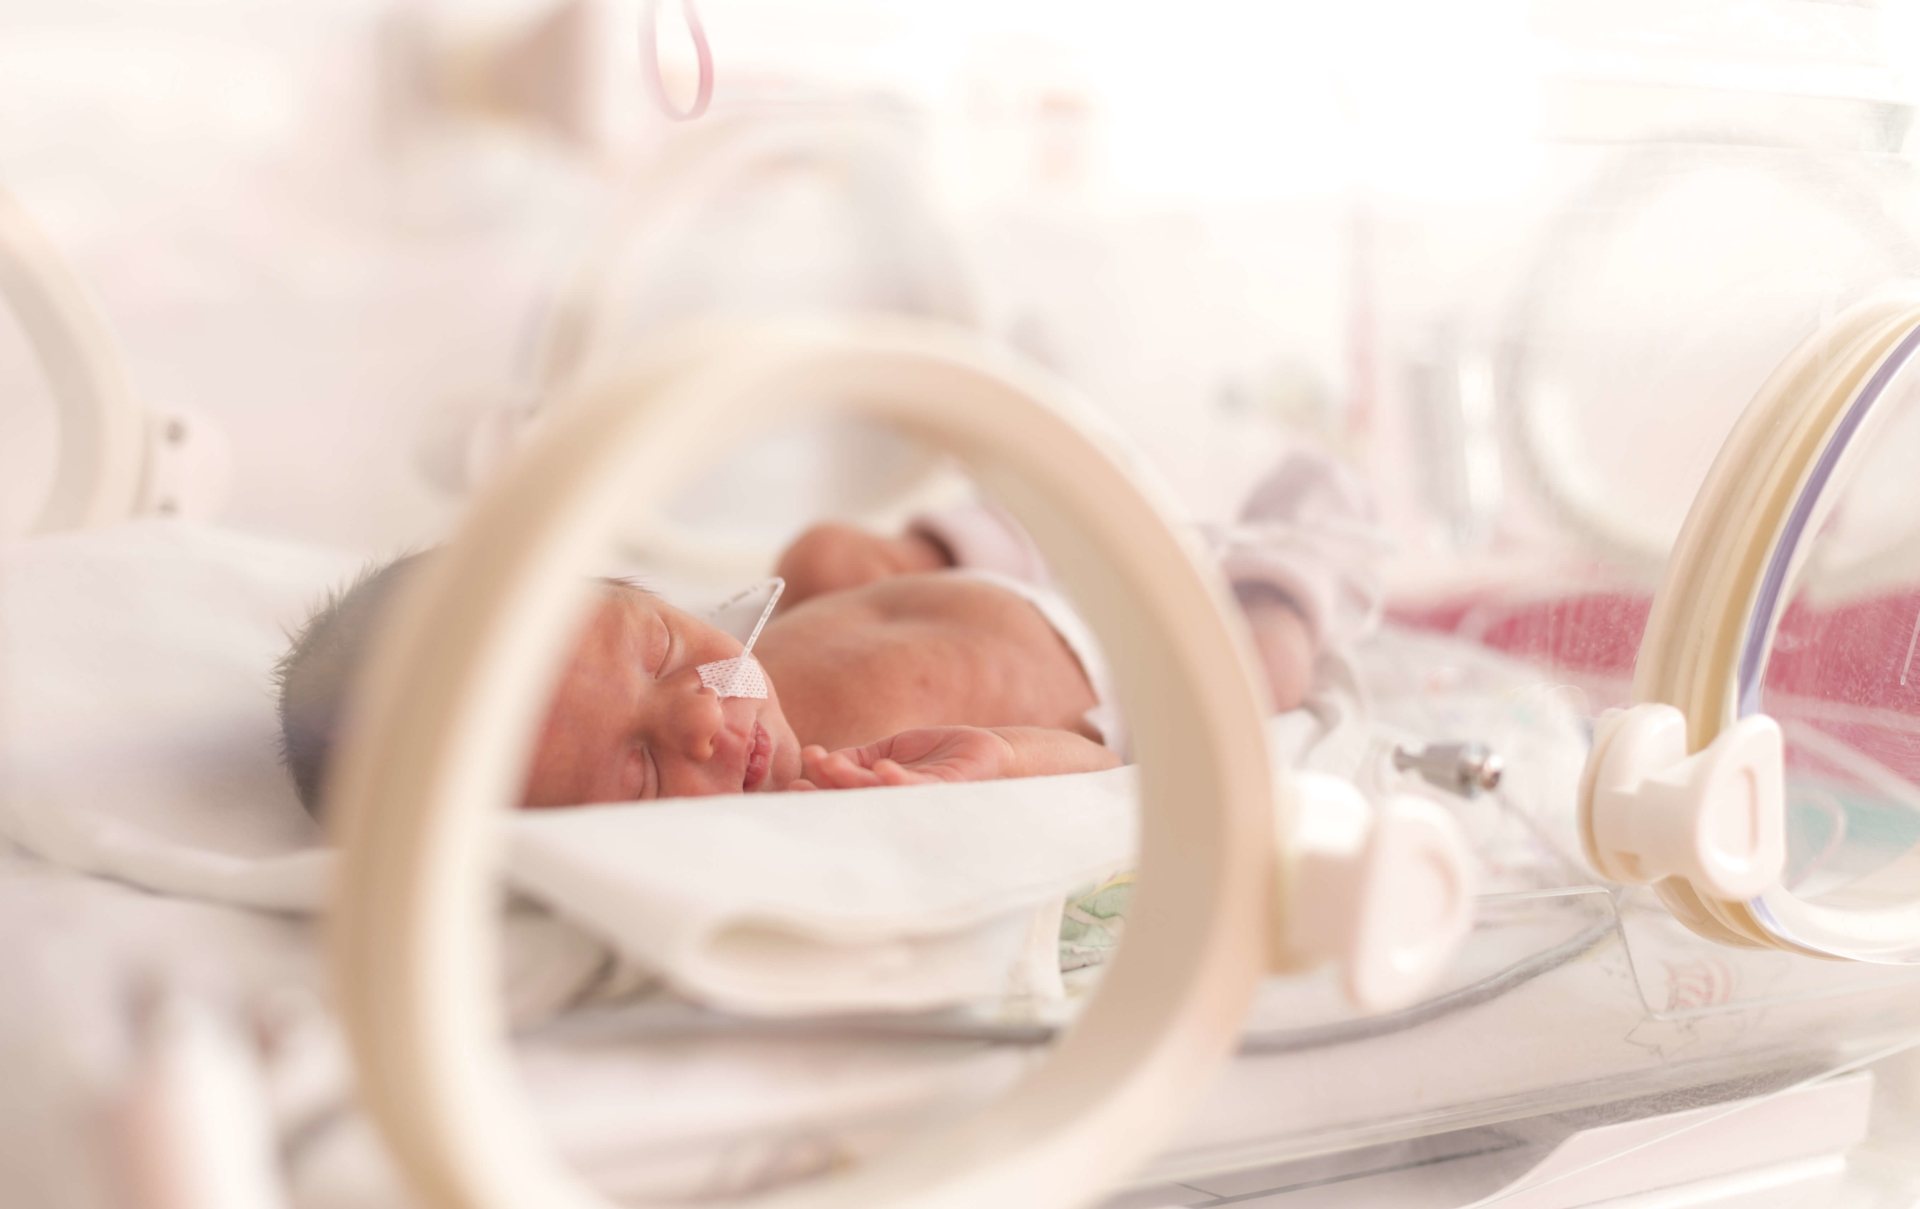 Omega-3 status test for prematurity risk